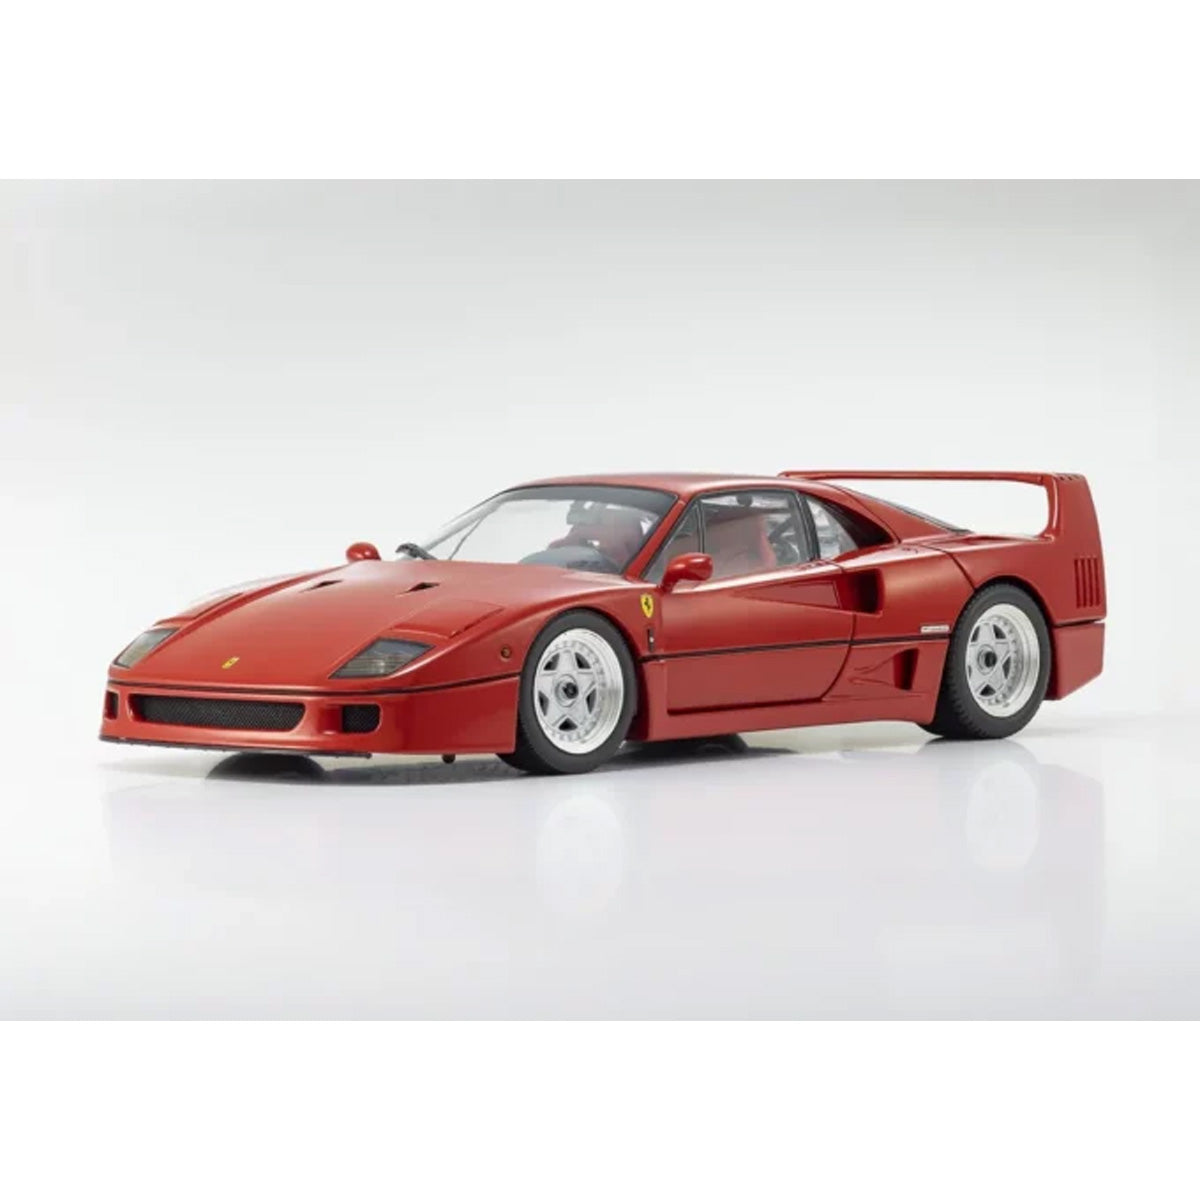 Ferrari F40 (Re-Production 08416R) Red - 1:18 Scale Diecast Model Car